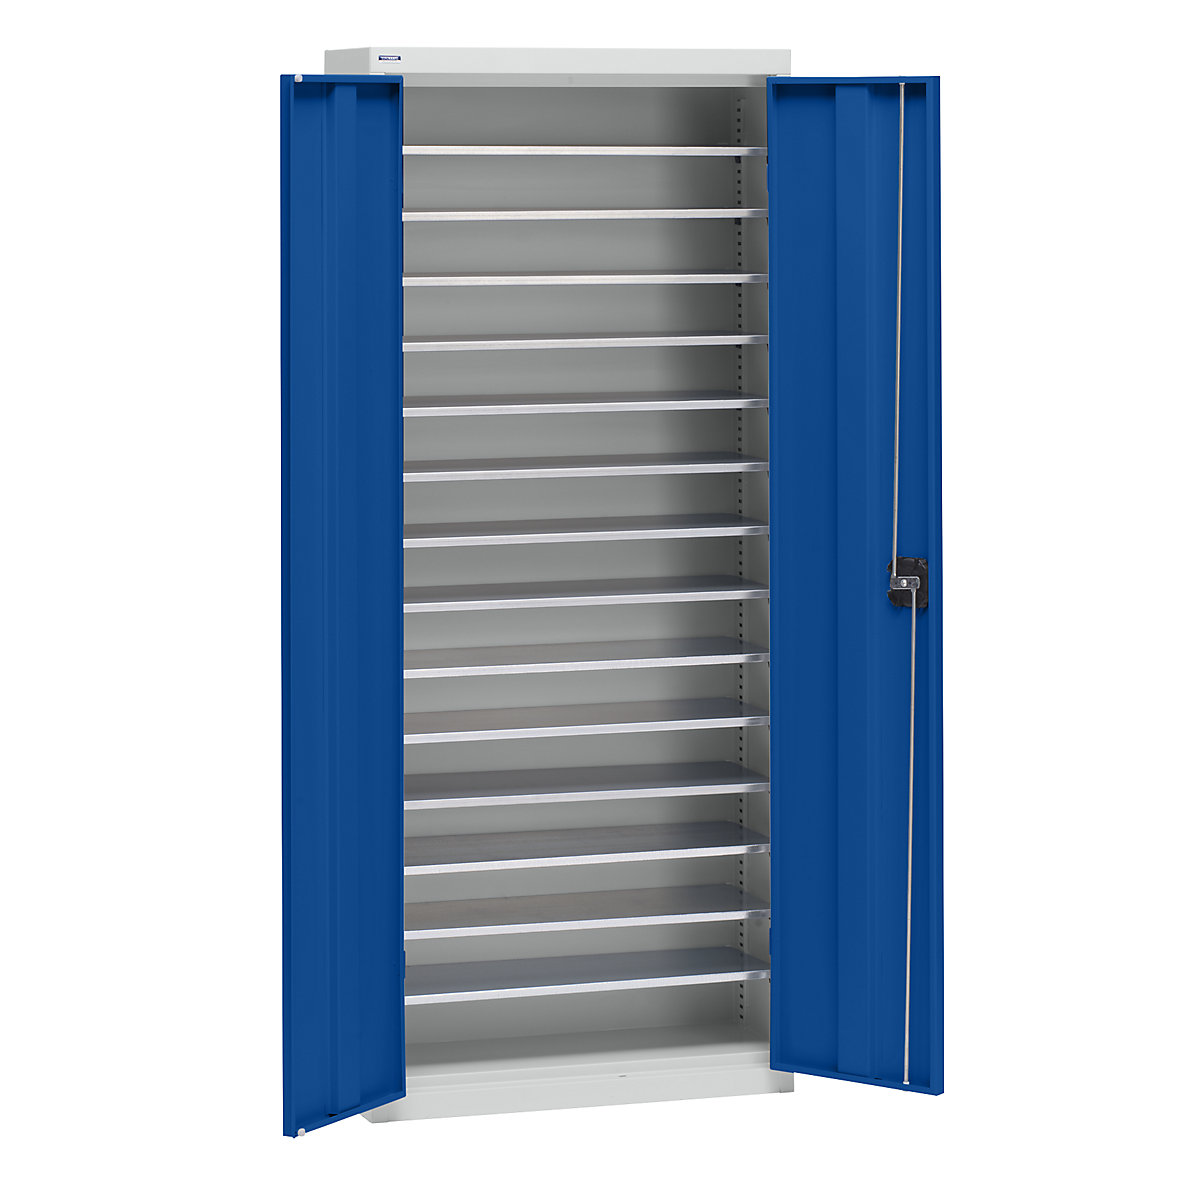 Storage cupboard made of sheet steel – eurokraft pro, height 1575 mm, light grey RAL 7035 / gentian blue RAL 5010, 14 shelves-5